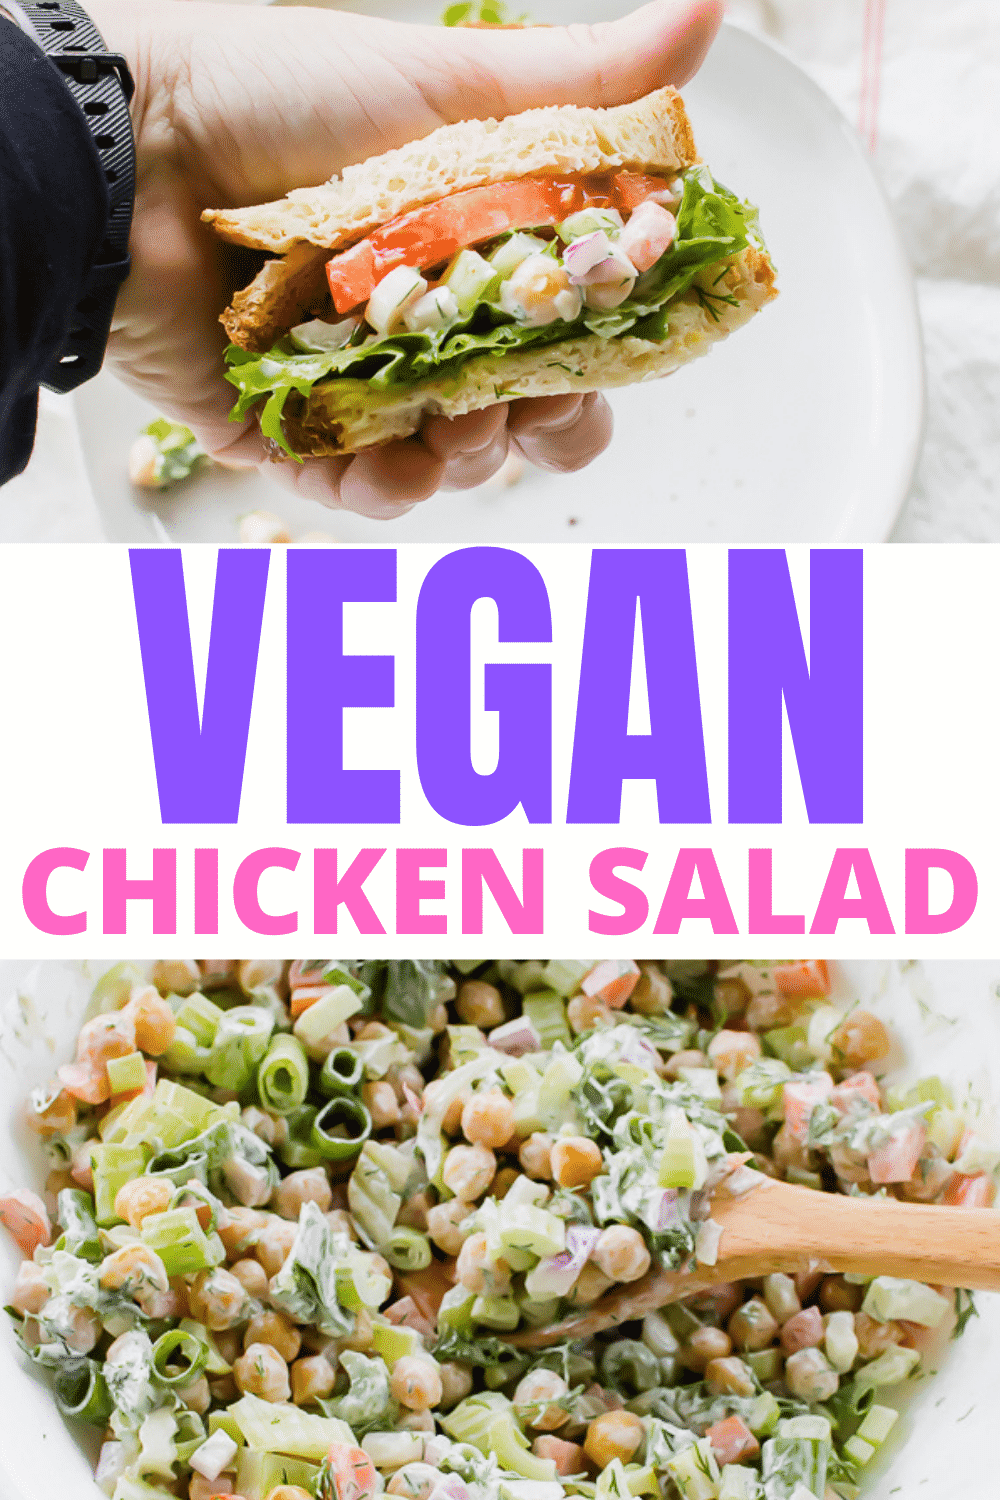 A vegan chicken salad sandwich with overlay text